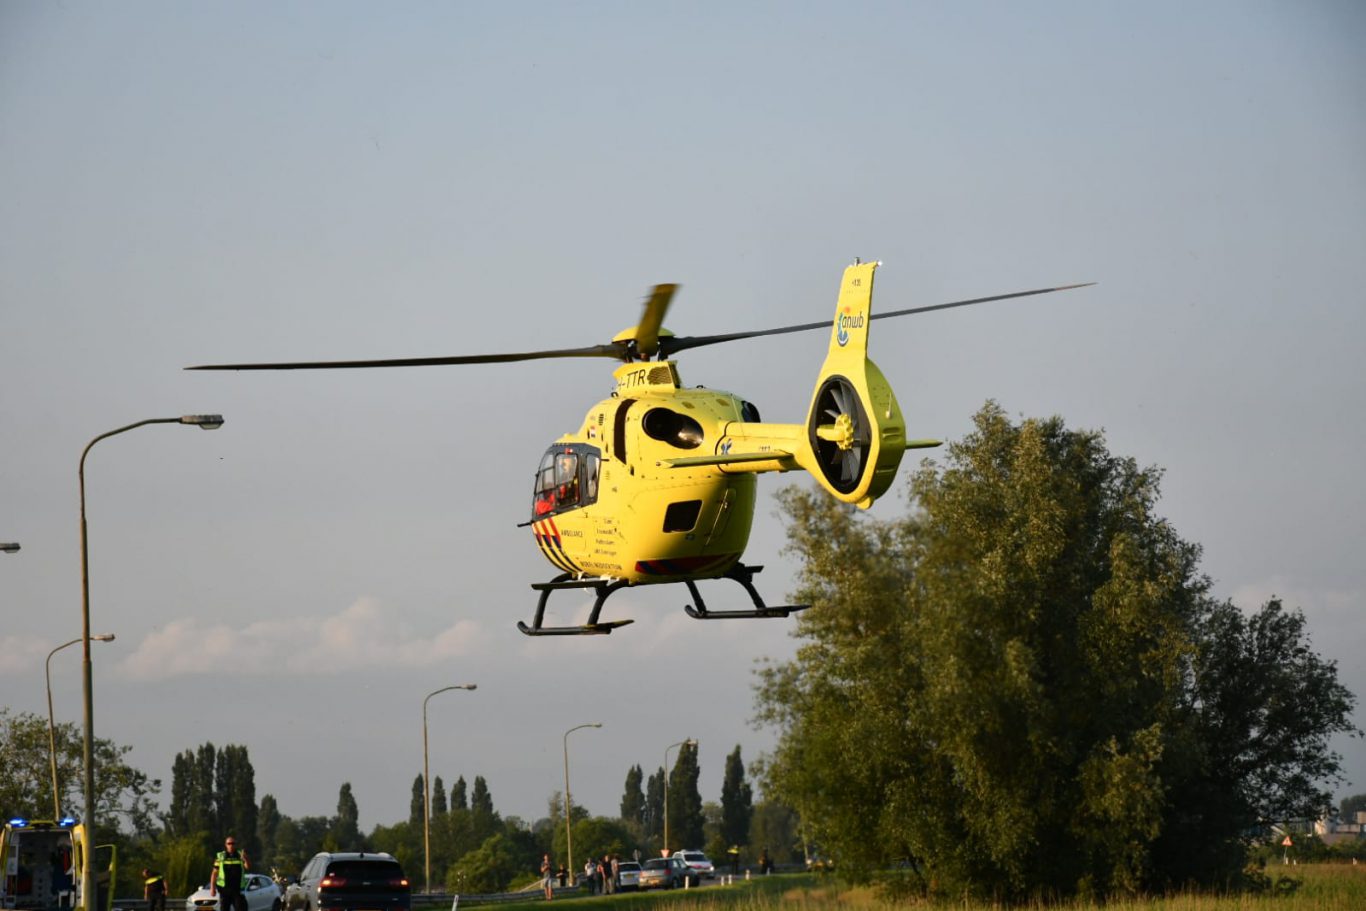 ongeval moordrecht traumahelikopter